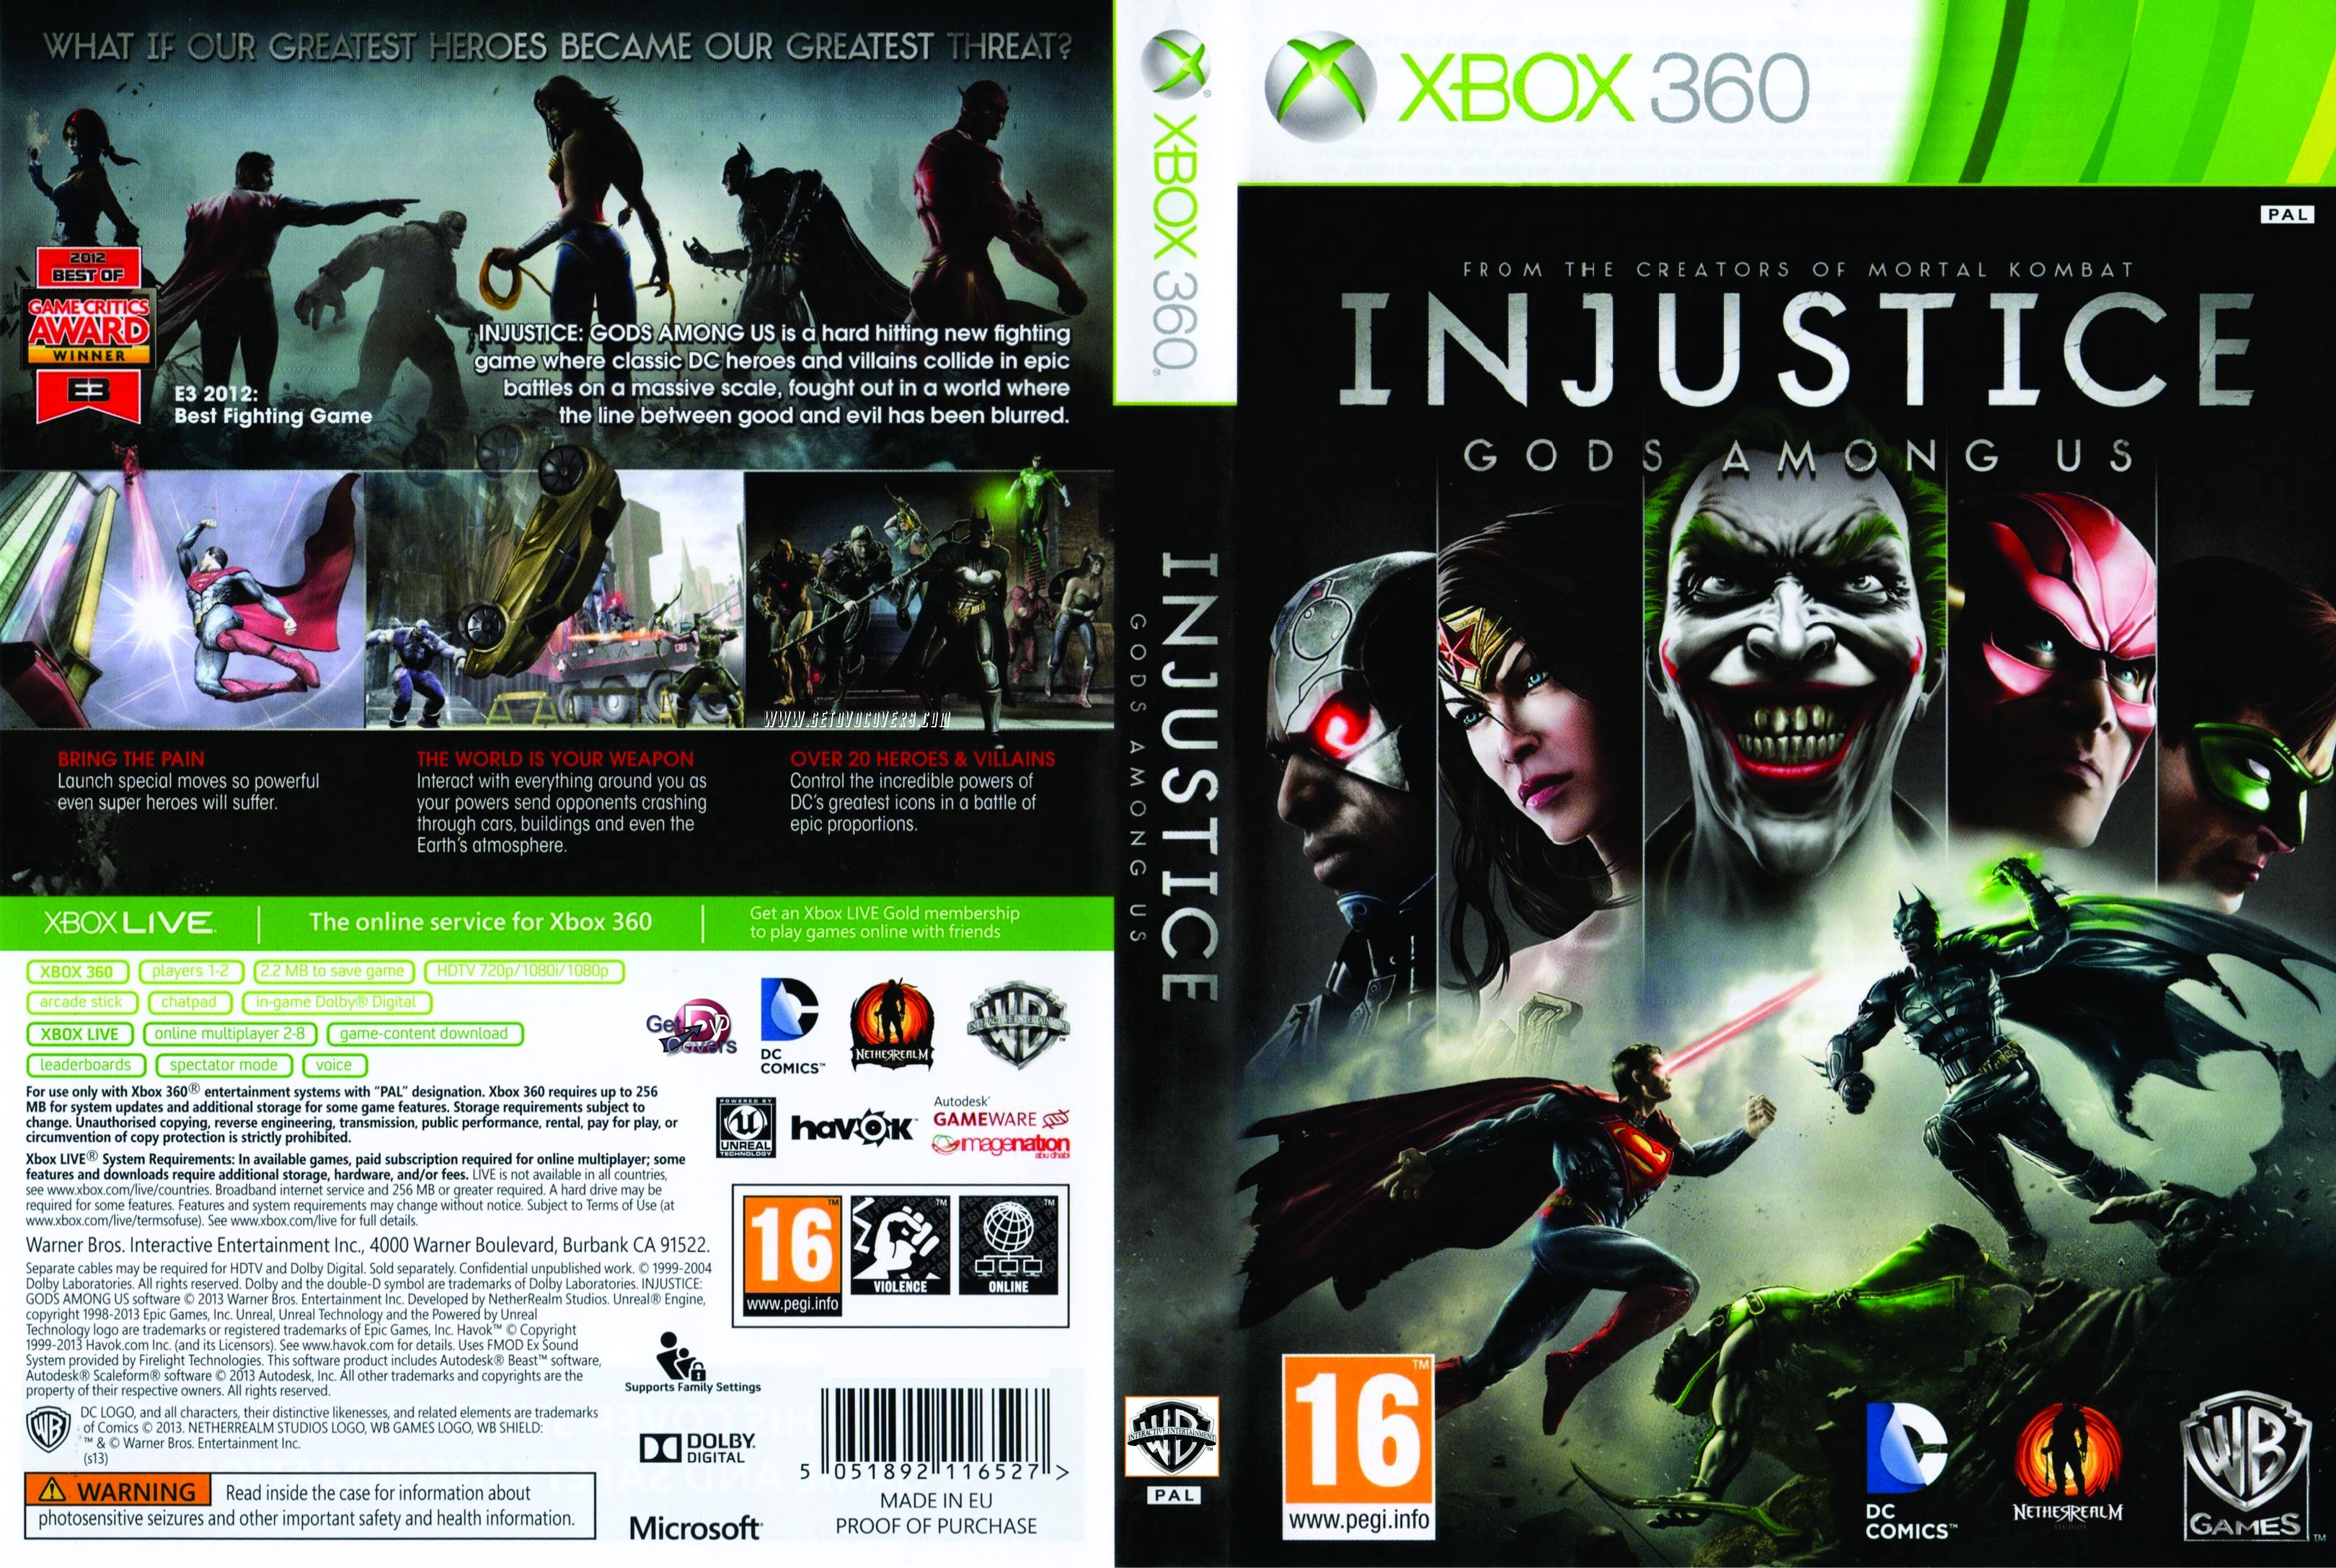 Batman freeboot. Injustice Xbox 360 обложка. Injustice Xbox 360 диск. Injustice Gods among us Xbox 360. [Xbox 360] Injustice: Gods among us (2013).